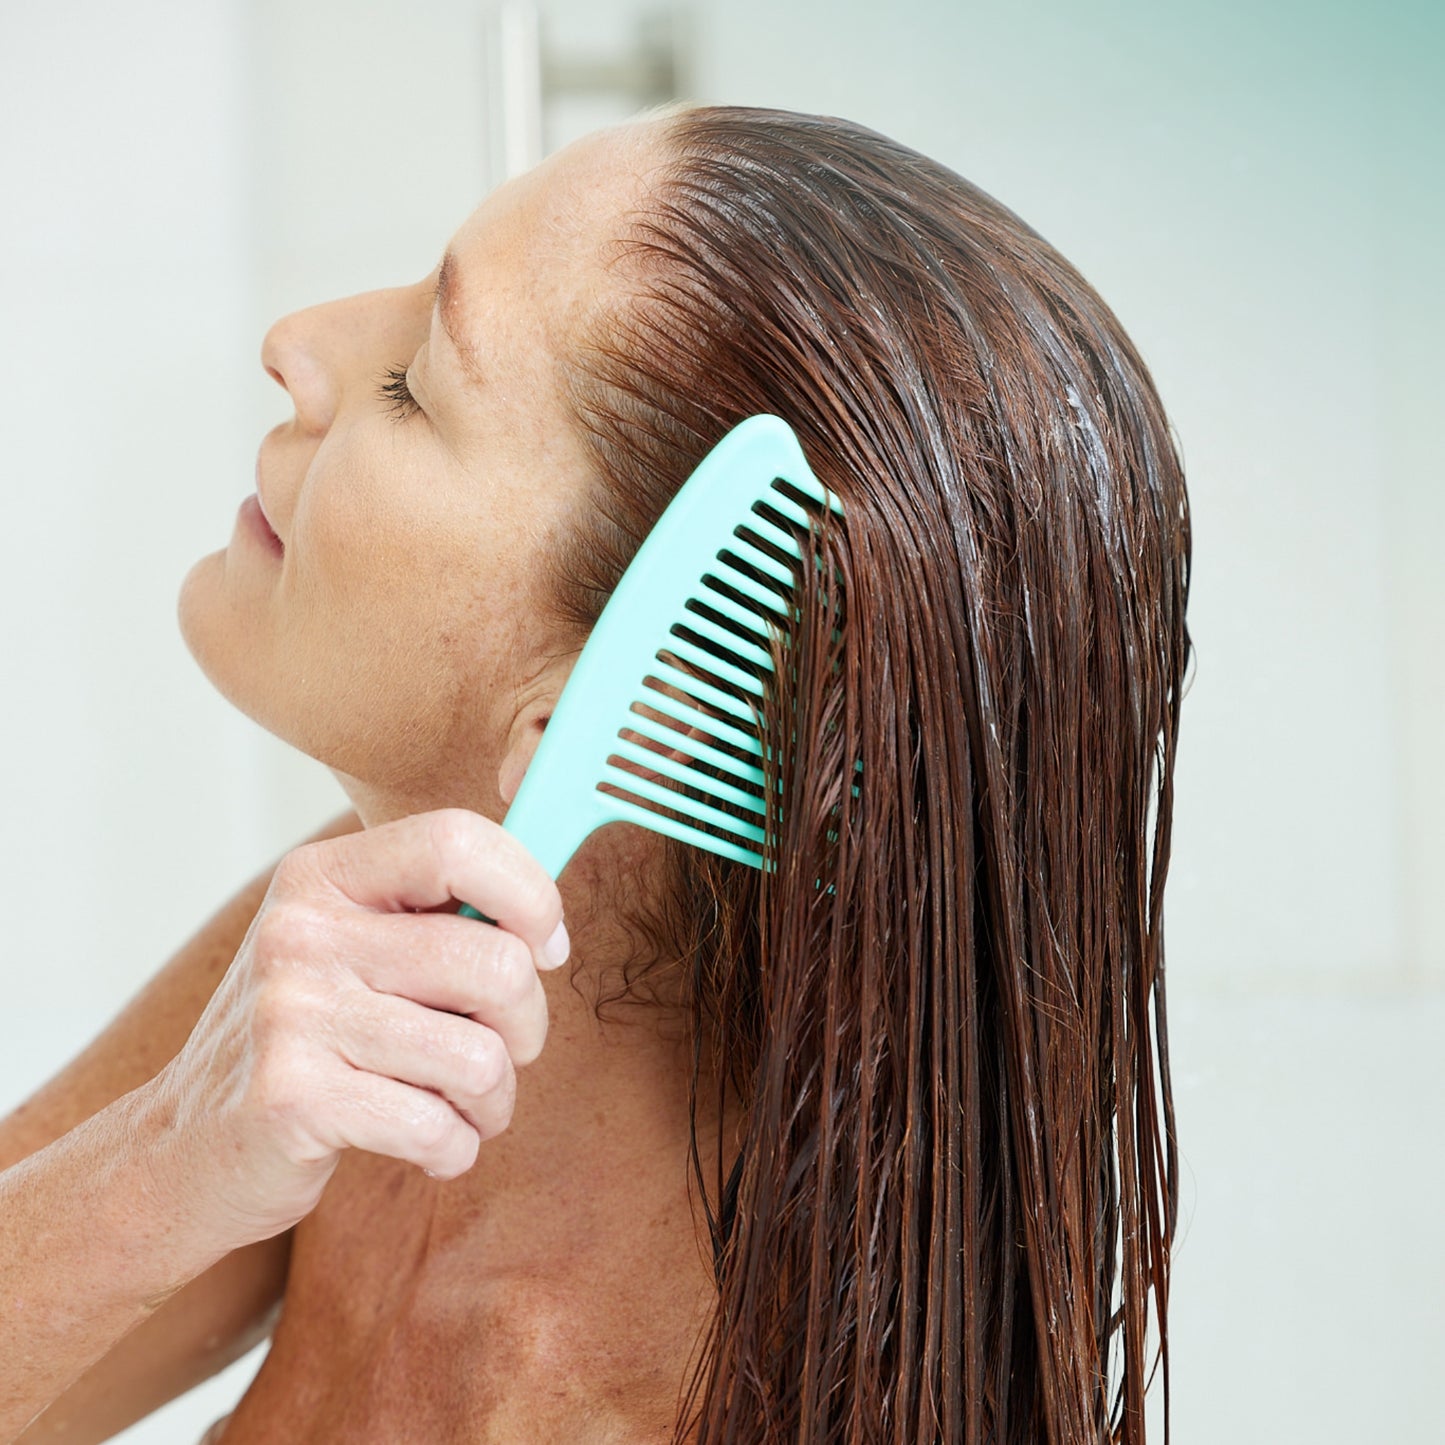 Woman combing RevAir conditioner through her wet hair